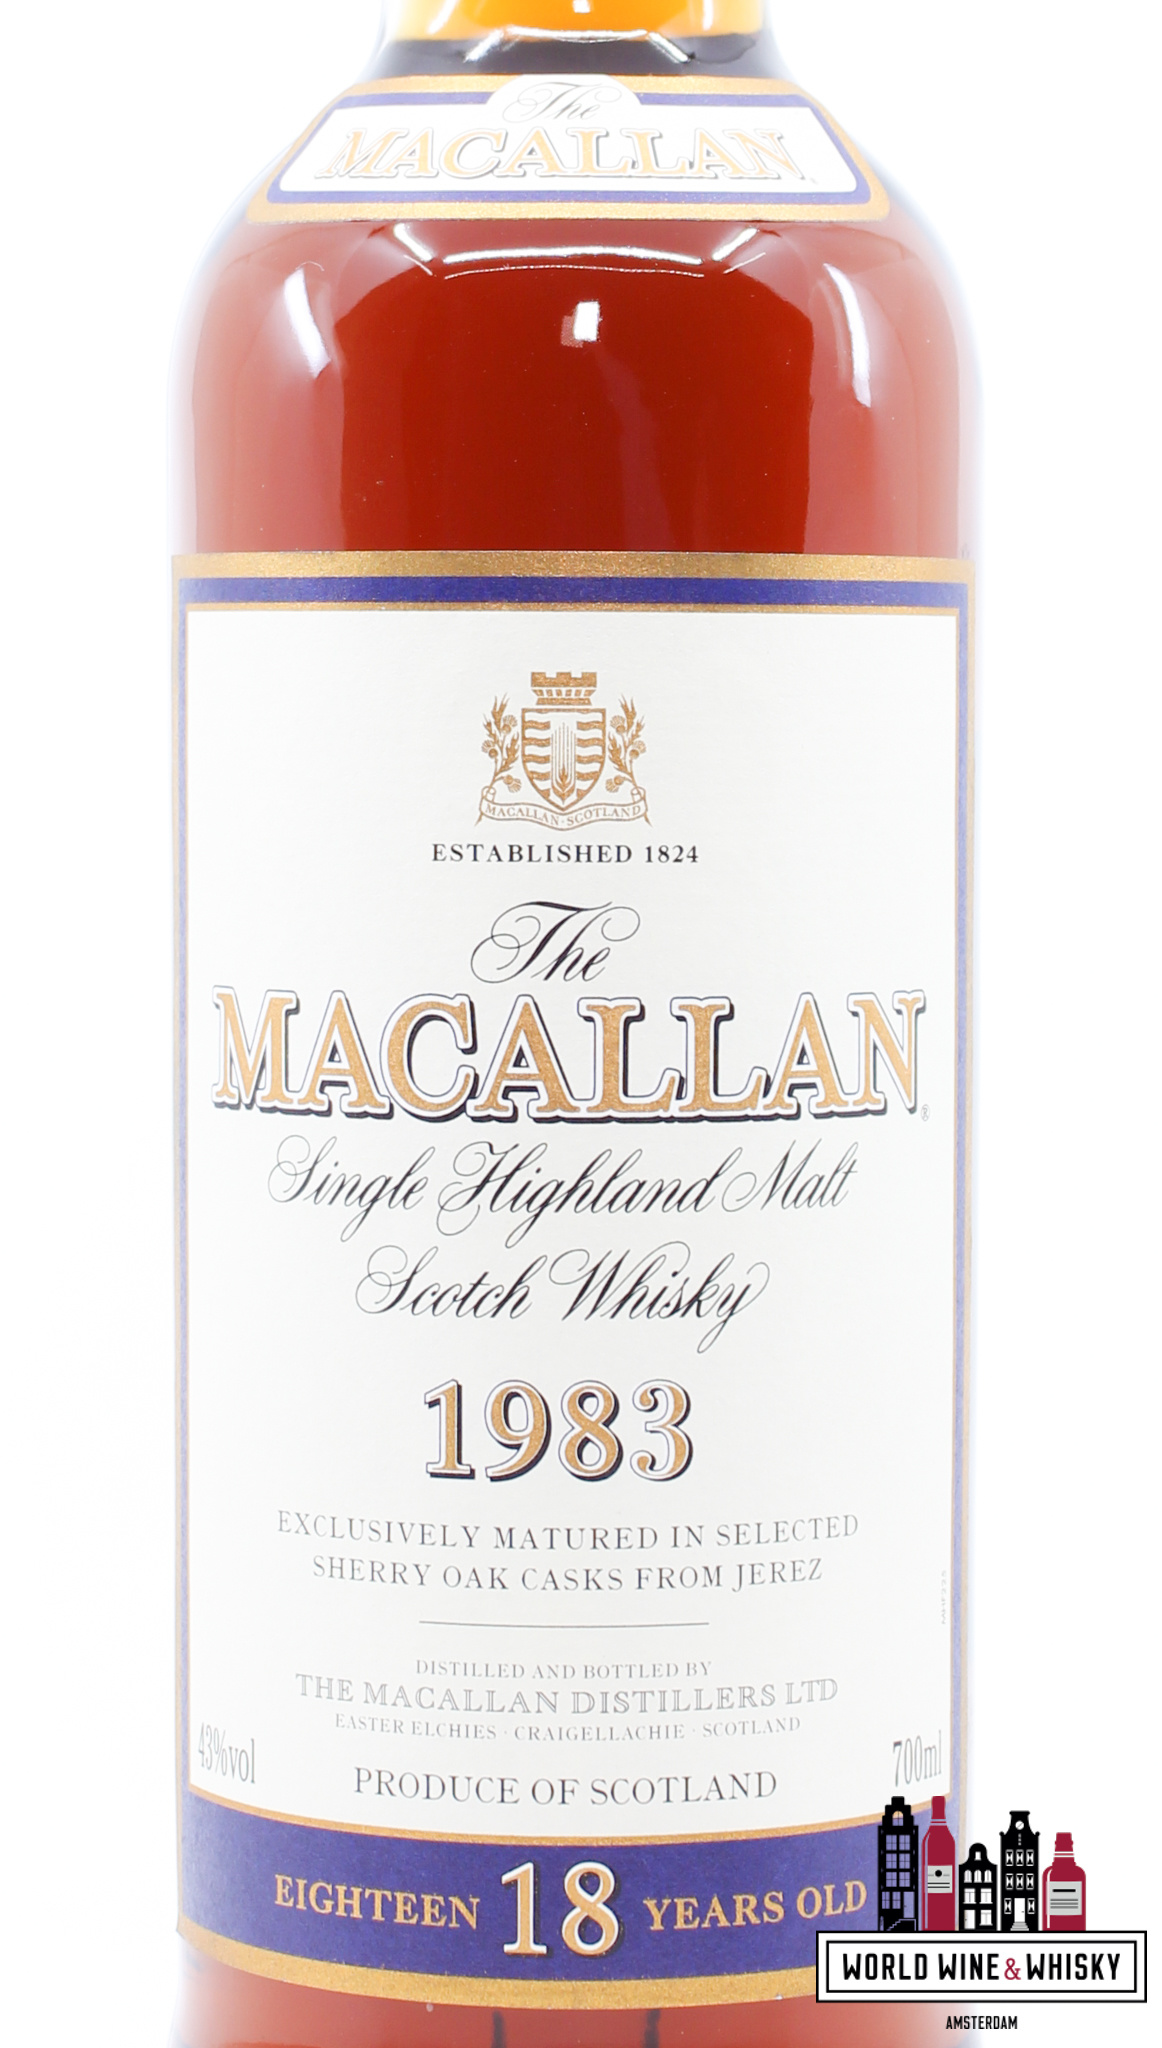 Macallan Macallan 18 Years Old 1983 2001 - Sherry Oak Casks - Vintage Release 43%